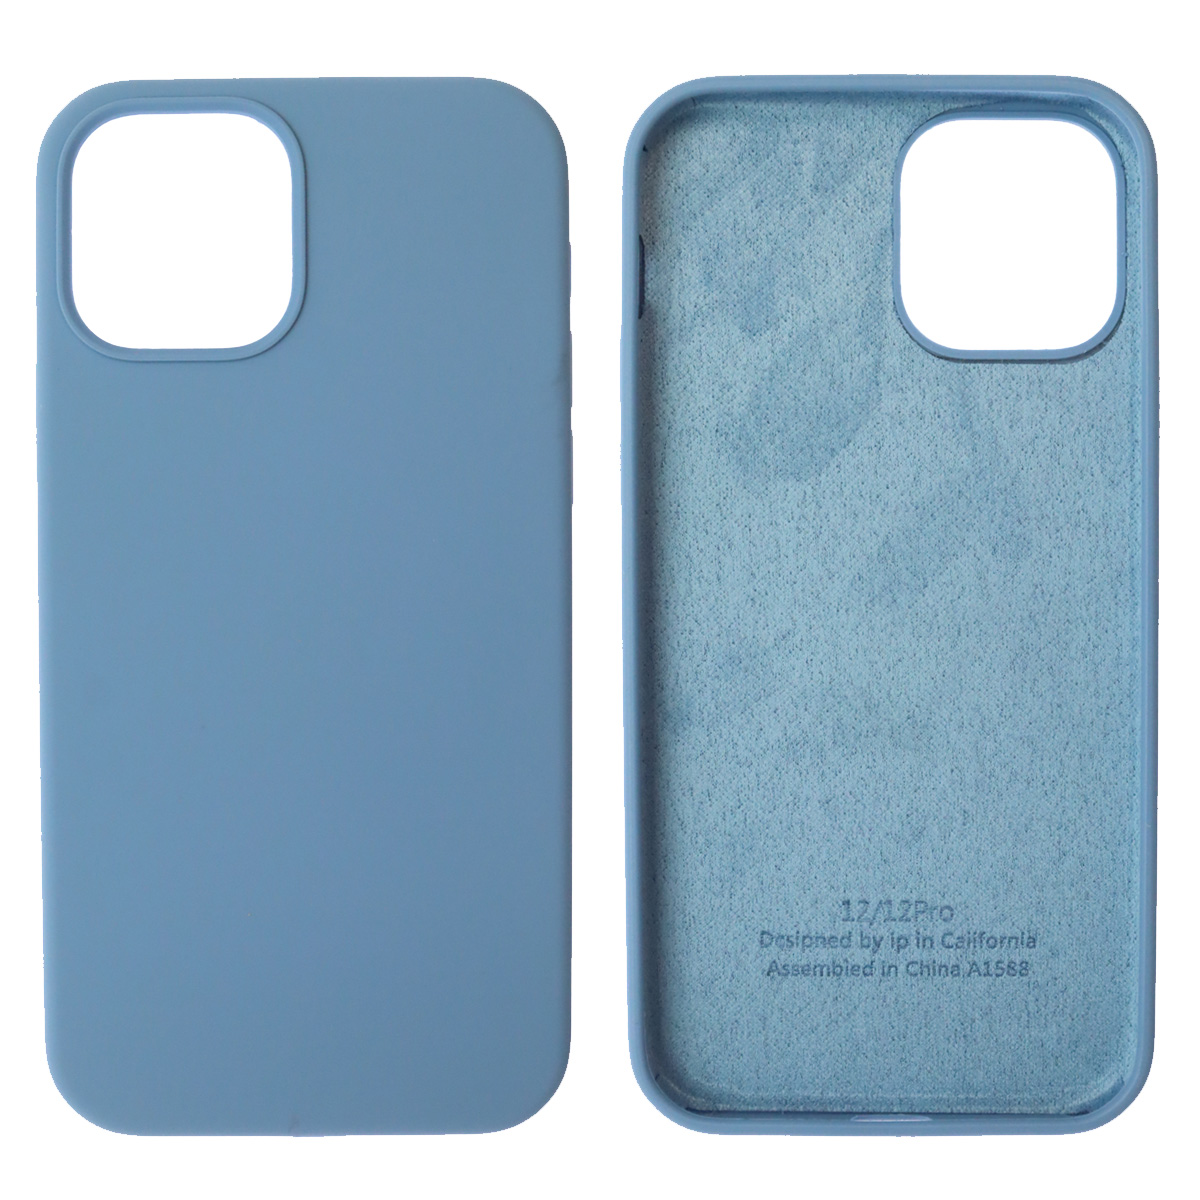 Чехол накладка Silicon Case для APPLE iPhone 12, iPhone 12 Pro, силикон, бархат, цвет васильковый